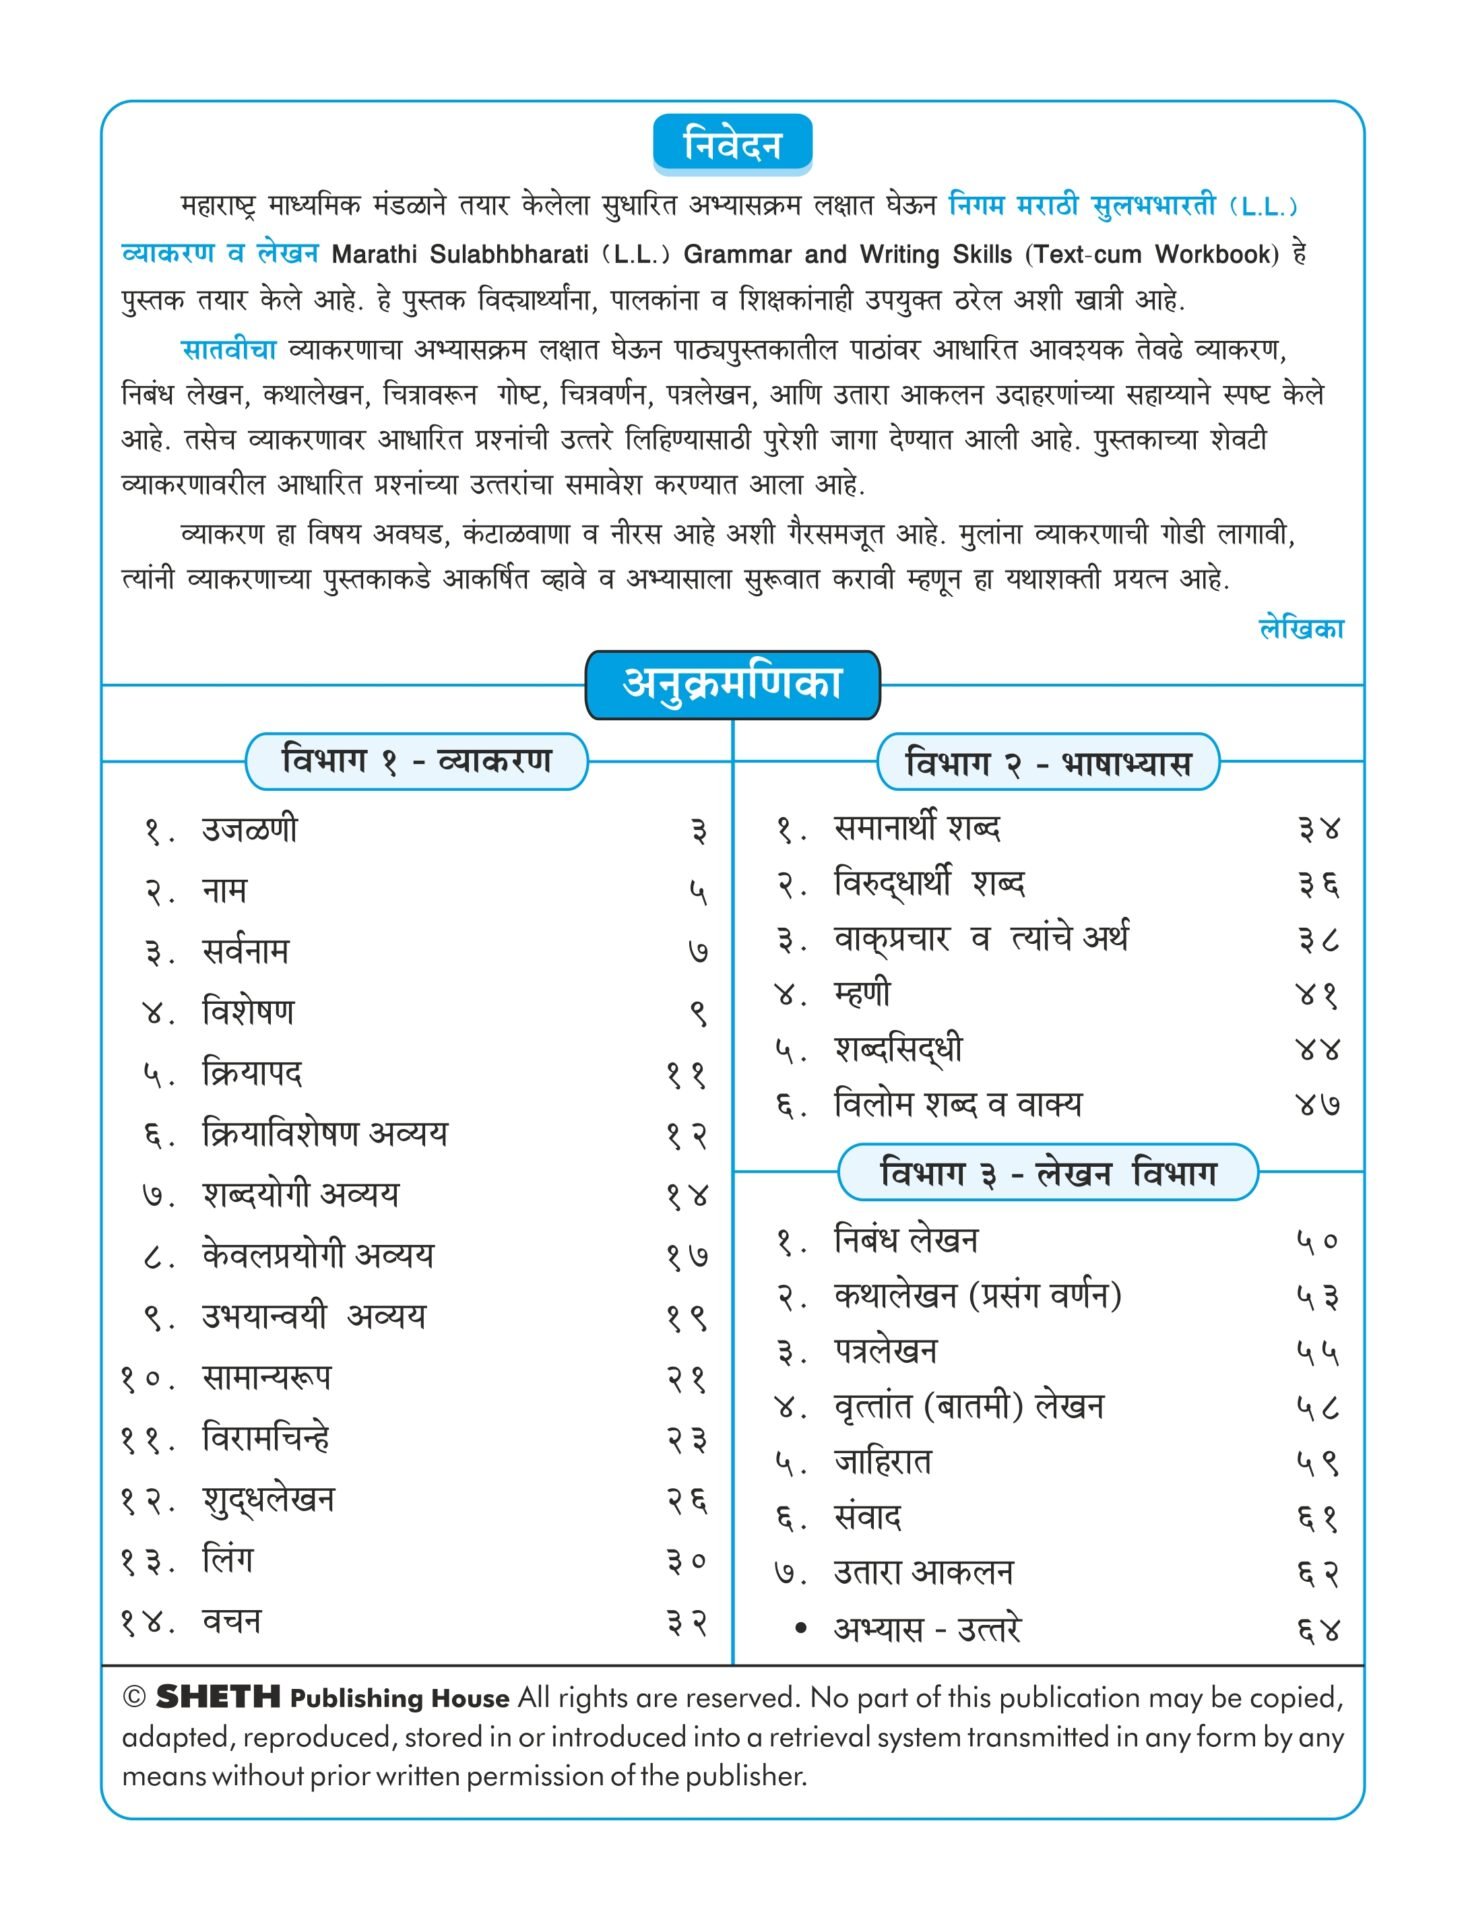 Nigam Marathi Sulabhbharati Grammar And Writing Skills Standard 7 2